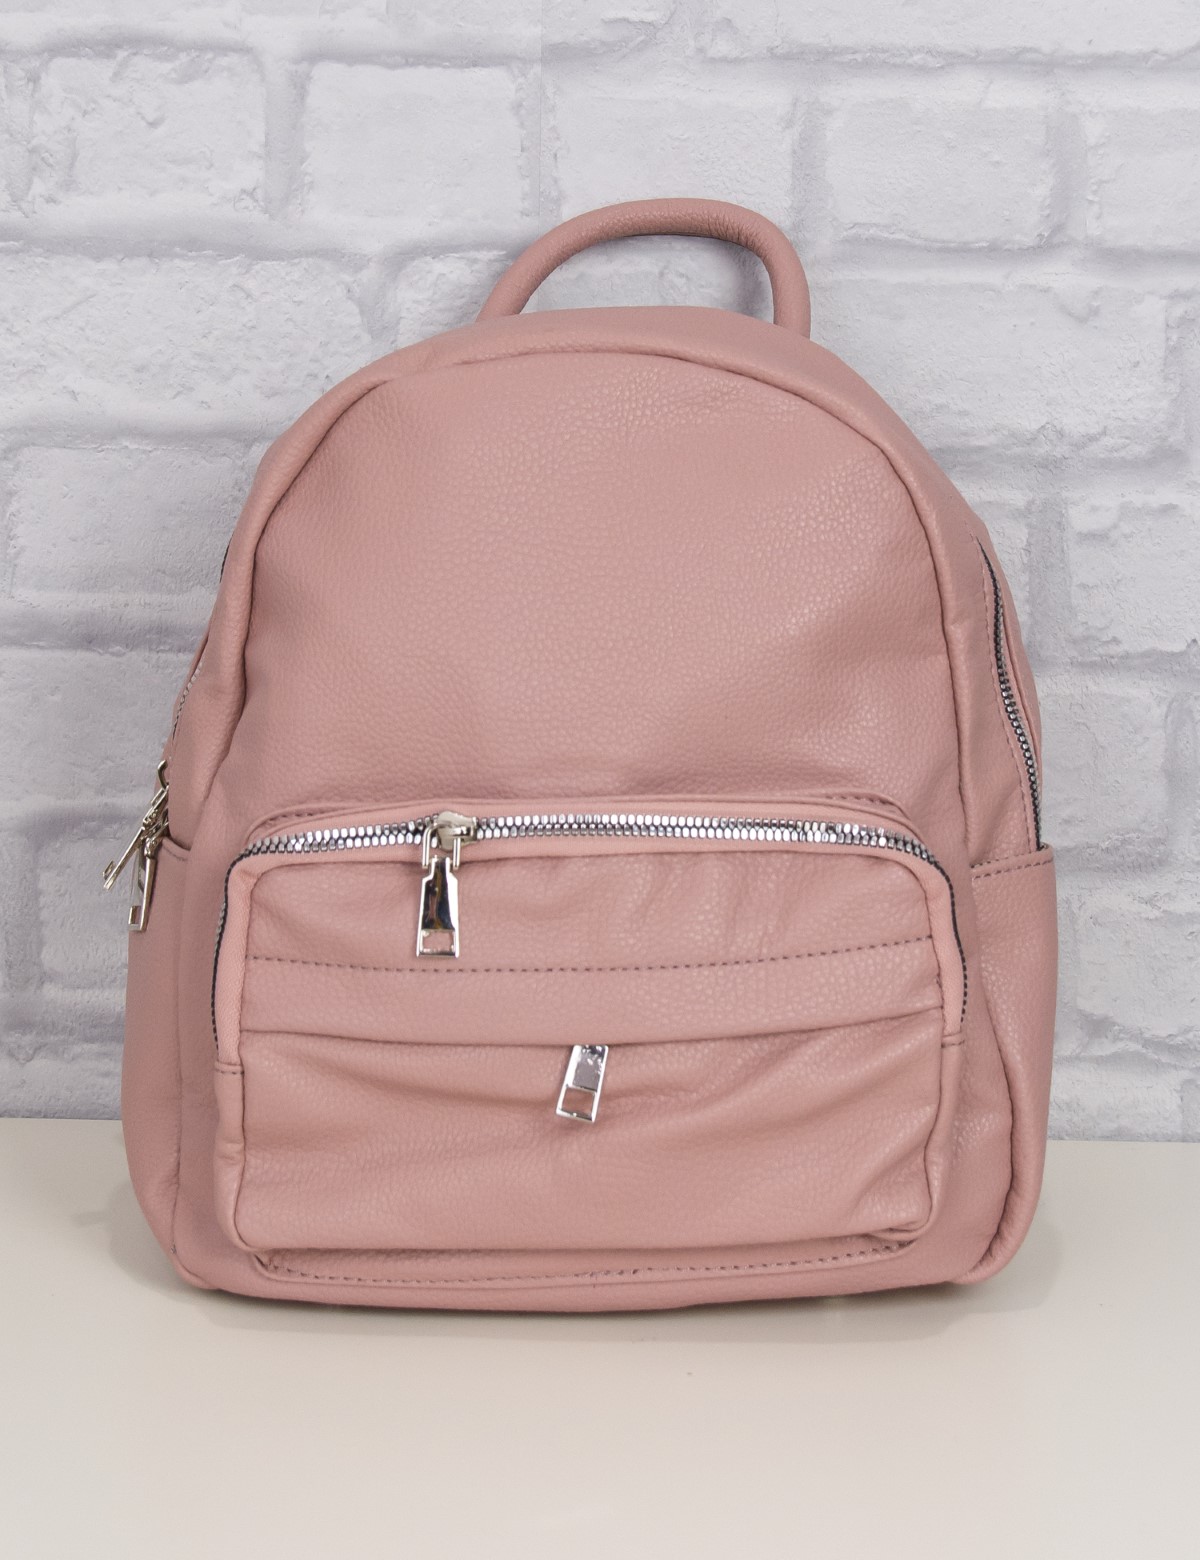 Huxley and Grace Γυναικειο ροζ mini Backpack δερματινη CK5696P